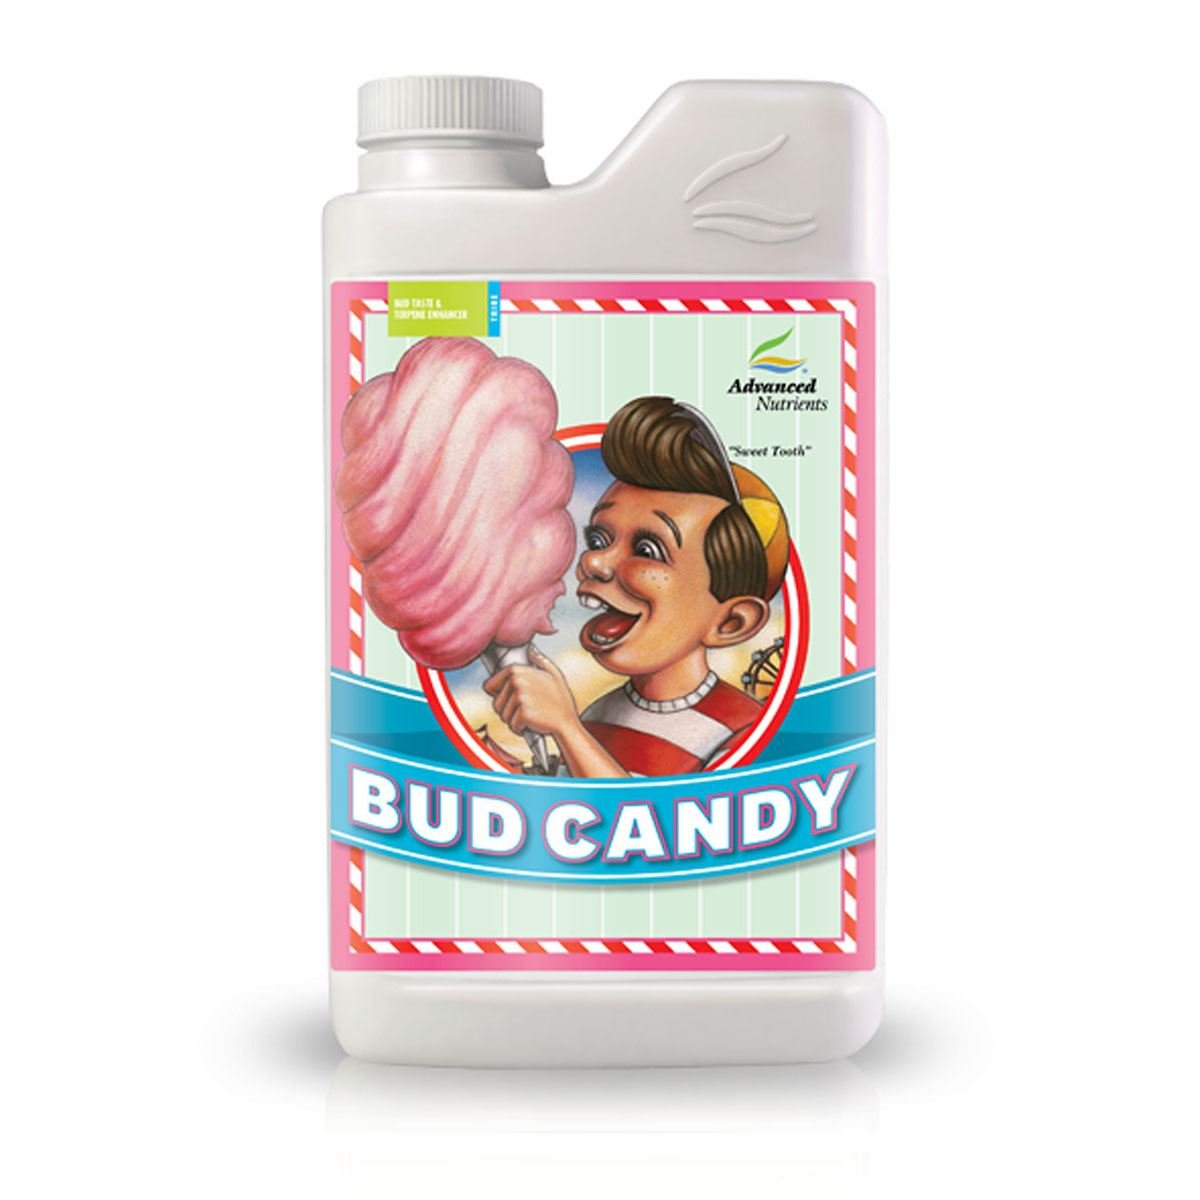 Bud Candy Advanced